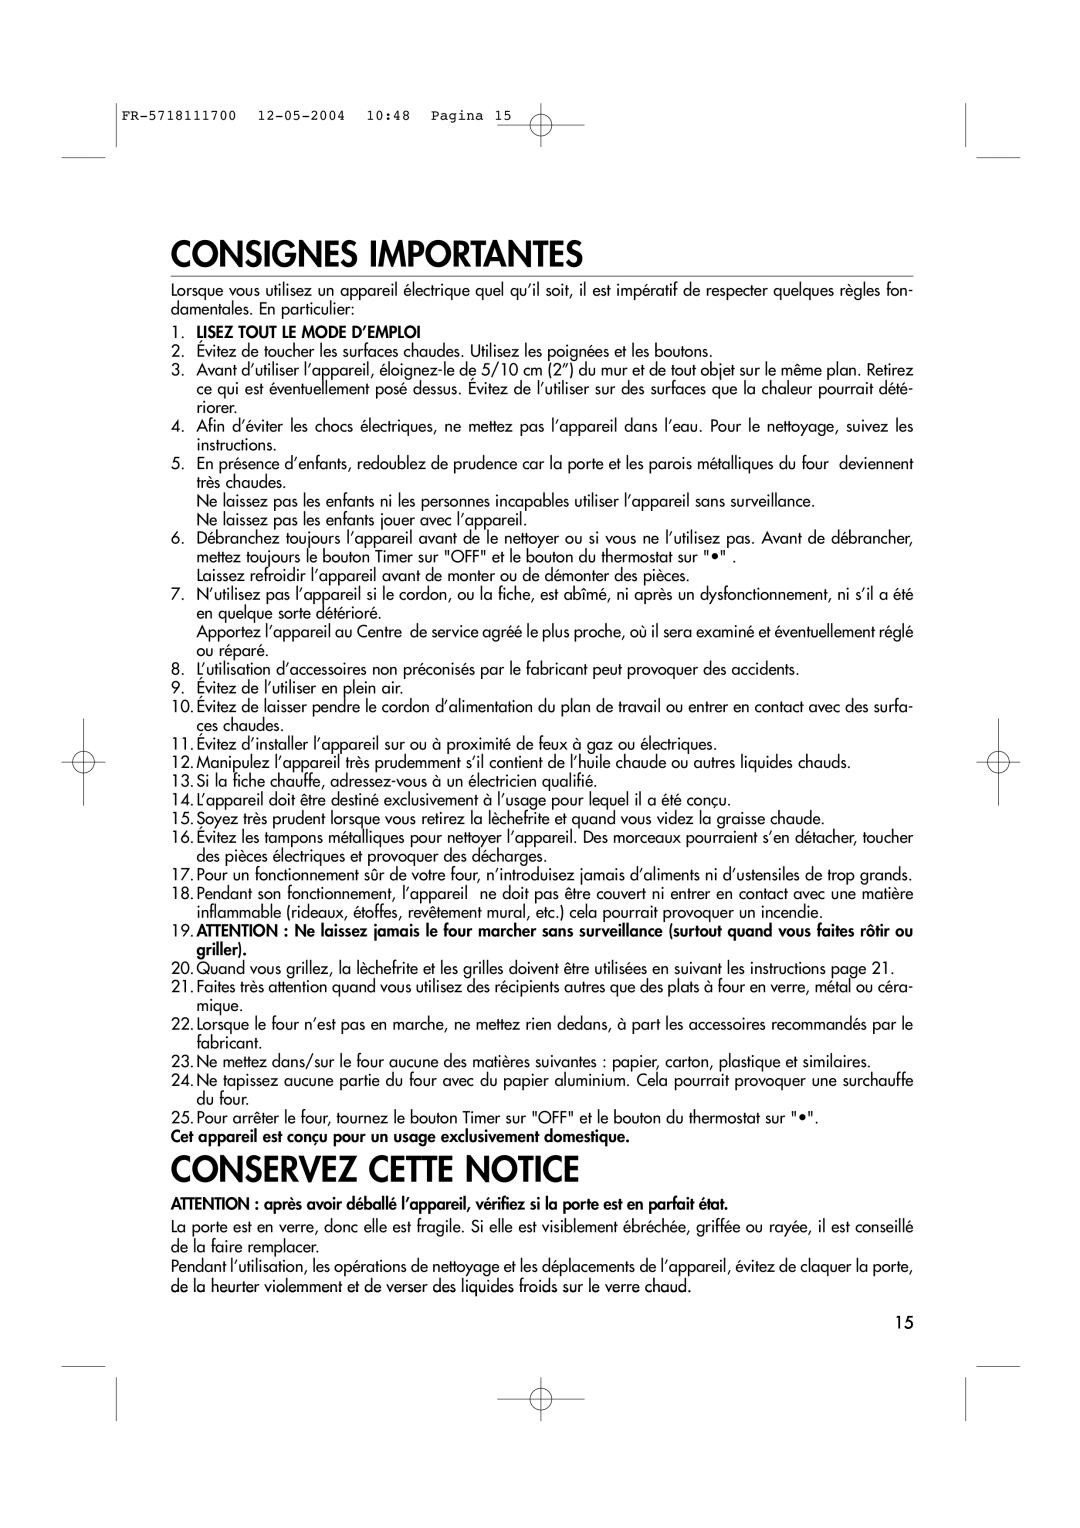 DeLonghi EO1200 Series manual Consignes Importantes, Conservez Cette Notice 